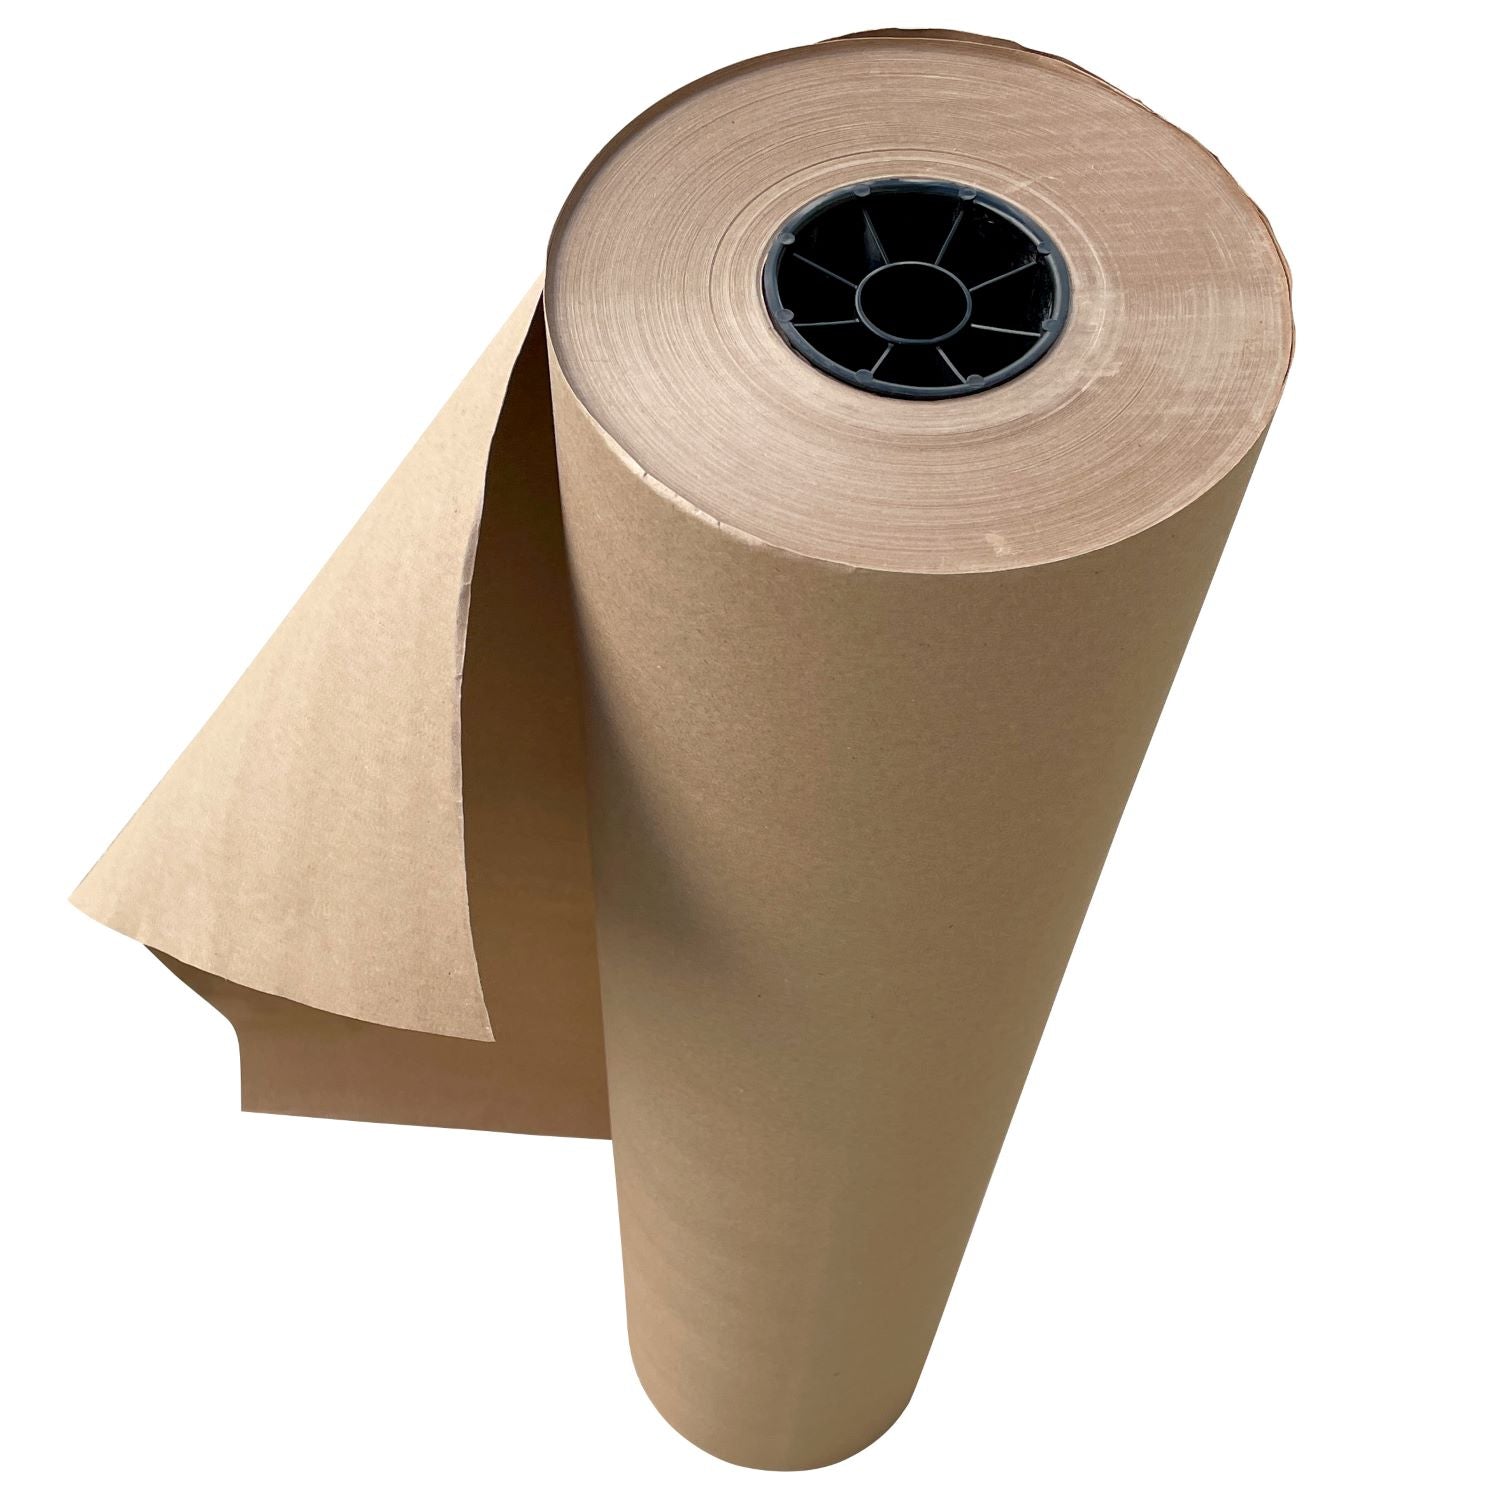 Kraft Paper Rolls - 36 wide, 9 Diameter, 60 lb Basis Weight, NSN